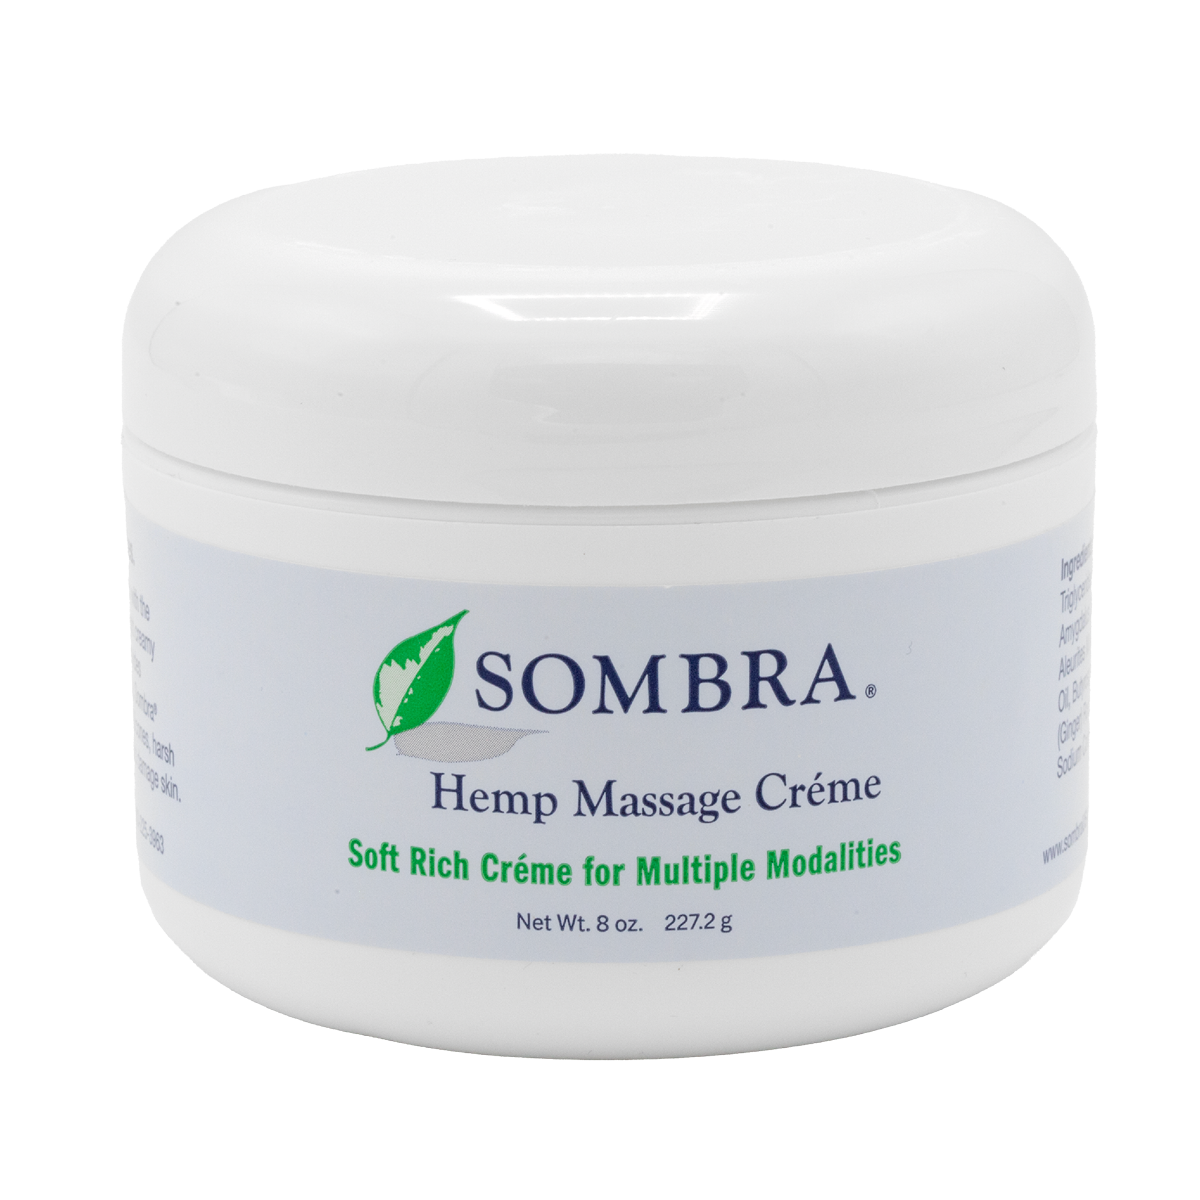 Eight ounce  size Sombra Hemp Massage Creme